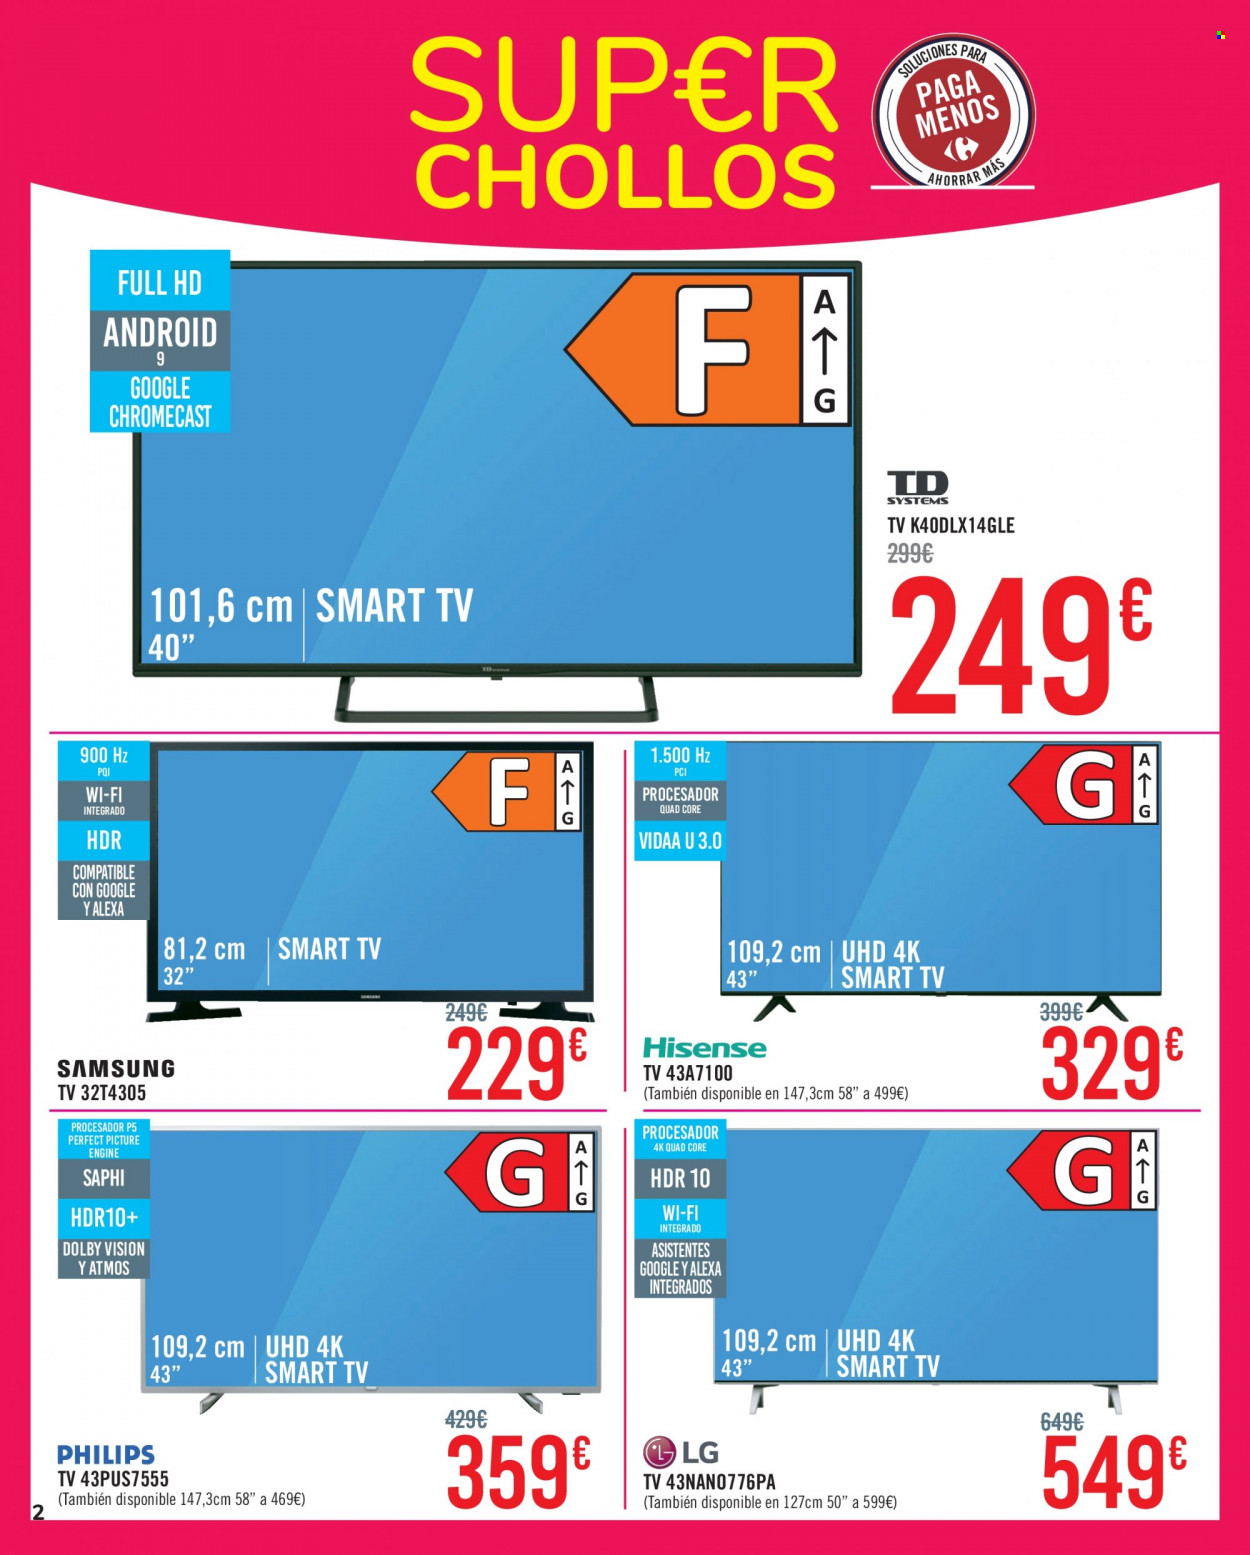 thumbnail - Folleto actual Carrefour - 14/10/21 - 26/10/21 - Ventas - LG, Philips, Samsung, Hisense, Smart TV, televisor, Chromecast. Página 2.